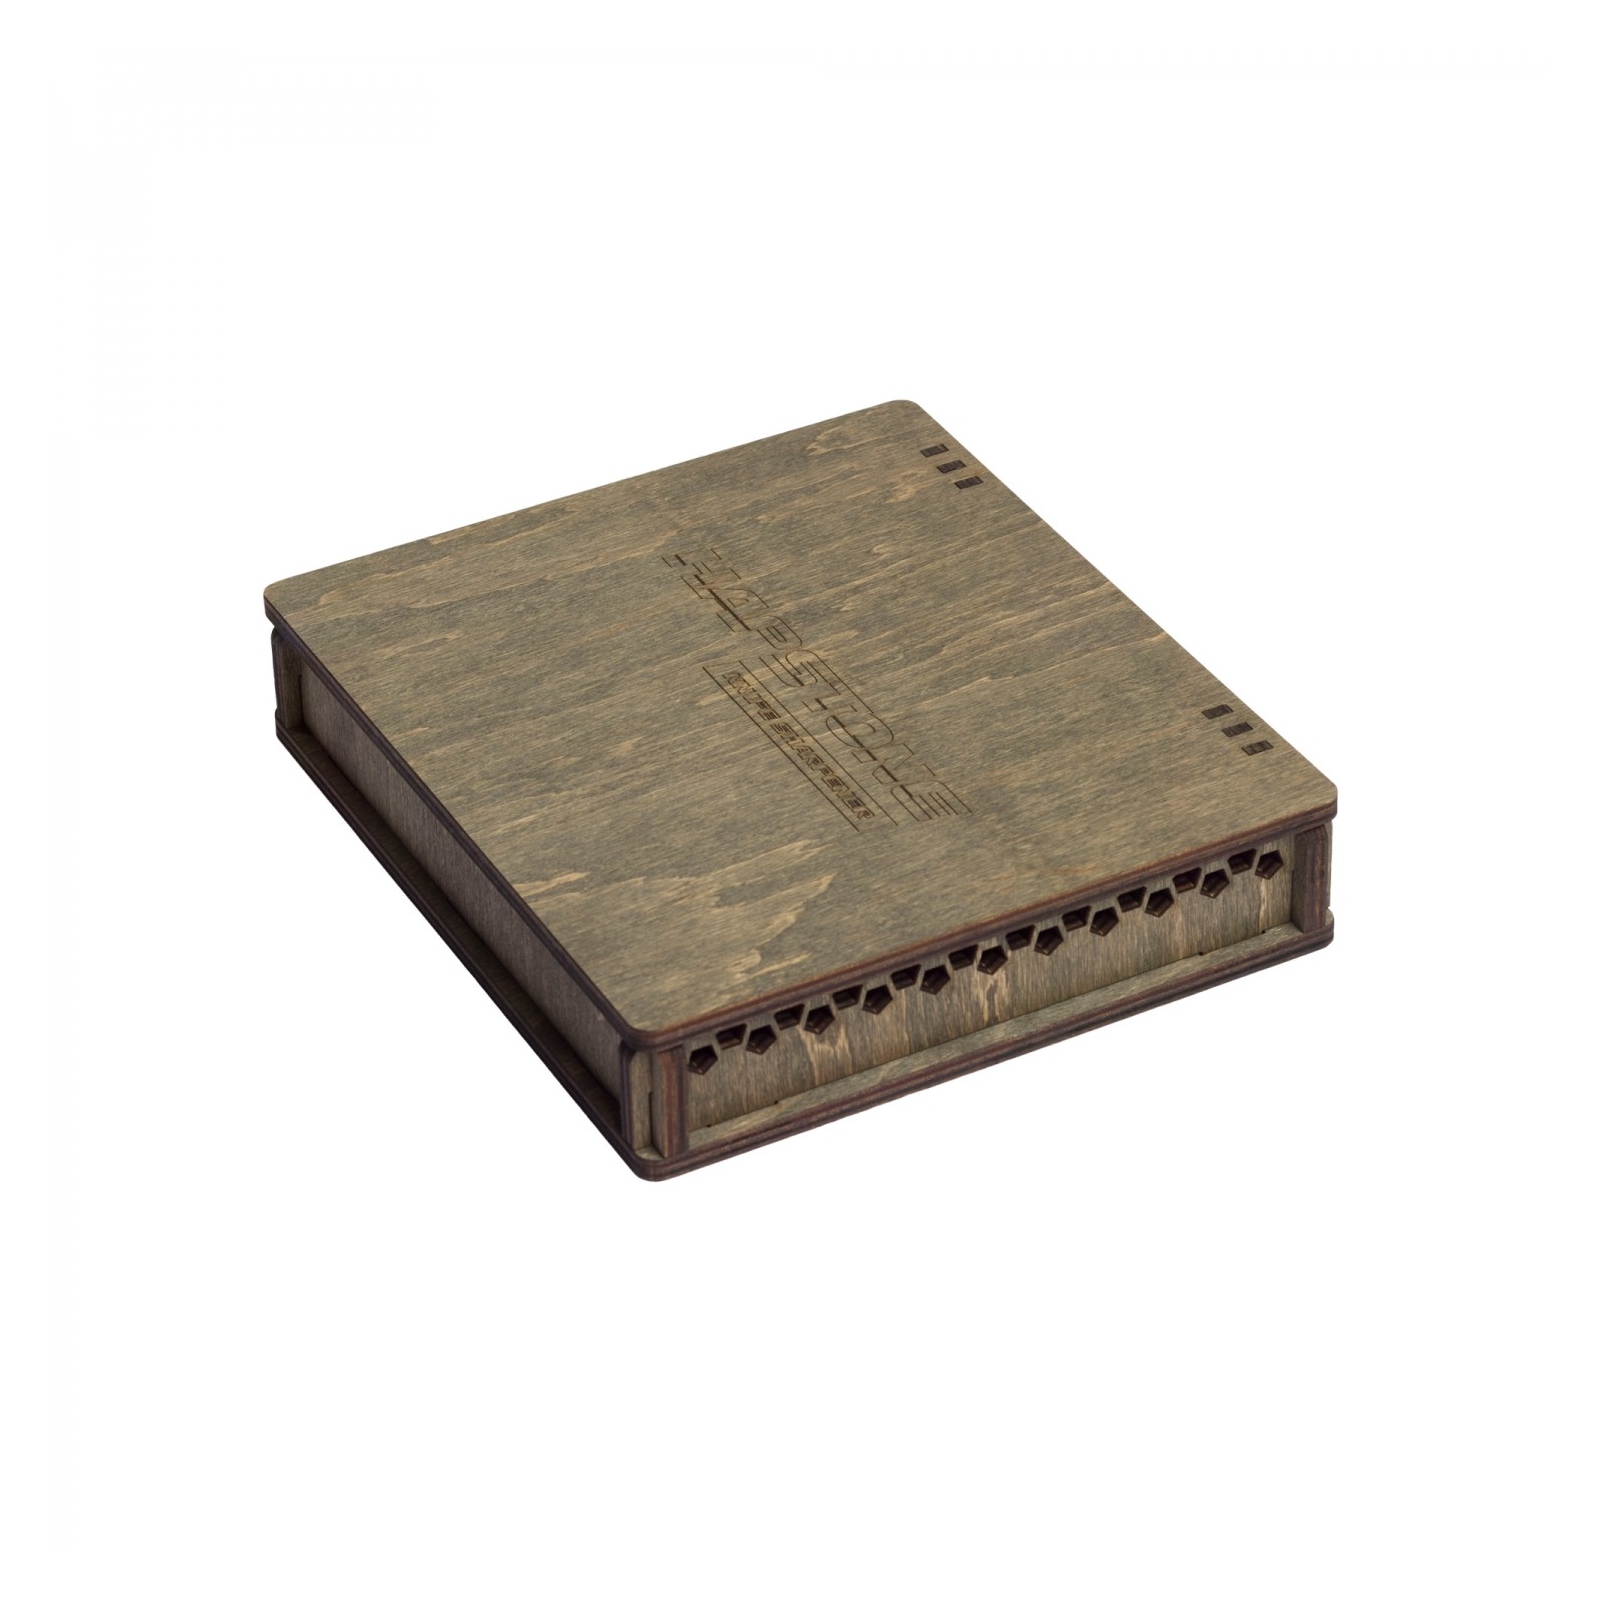 3Plywood storage case for stones 9-1500x1500.jpg